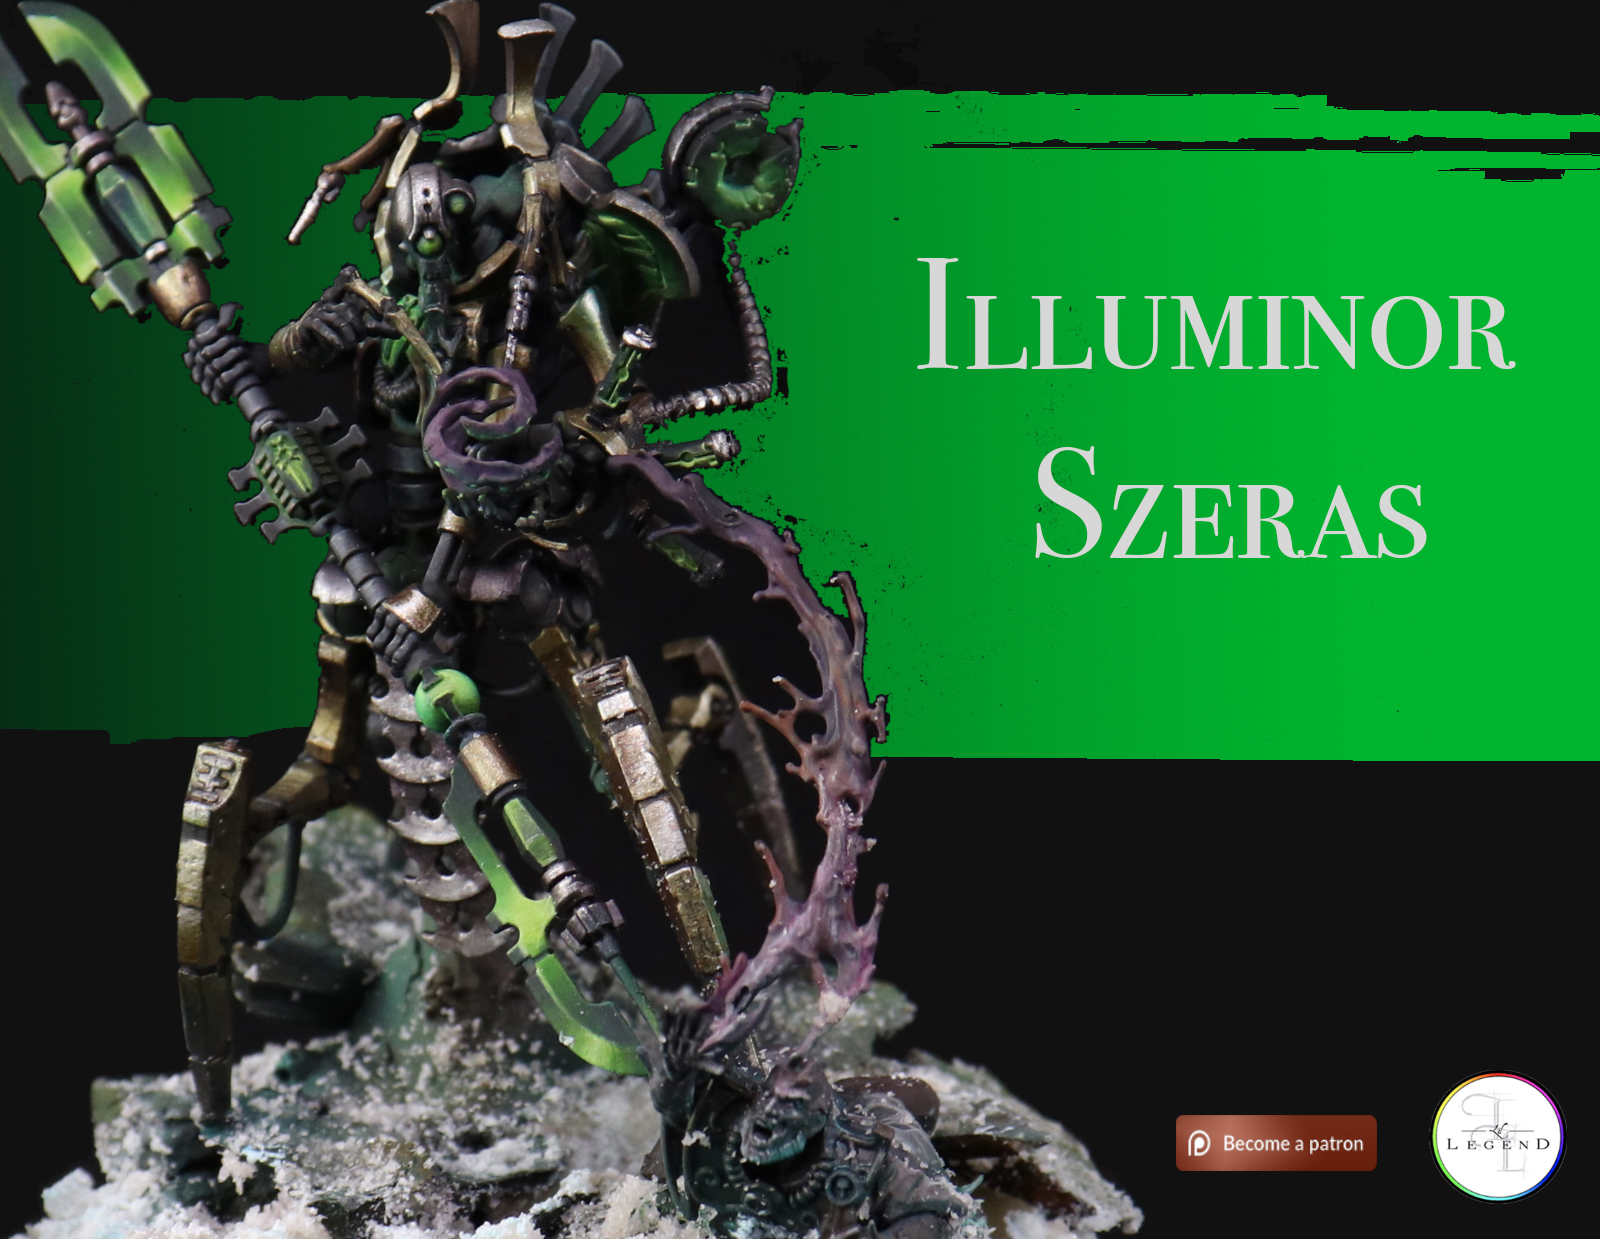 Illuminor Szeras Necron Commission Superbly Painted Warhammer 40K